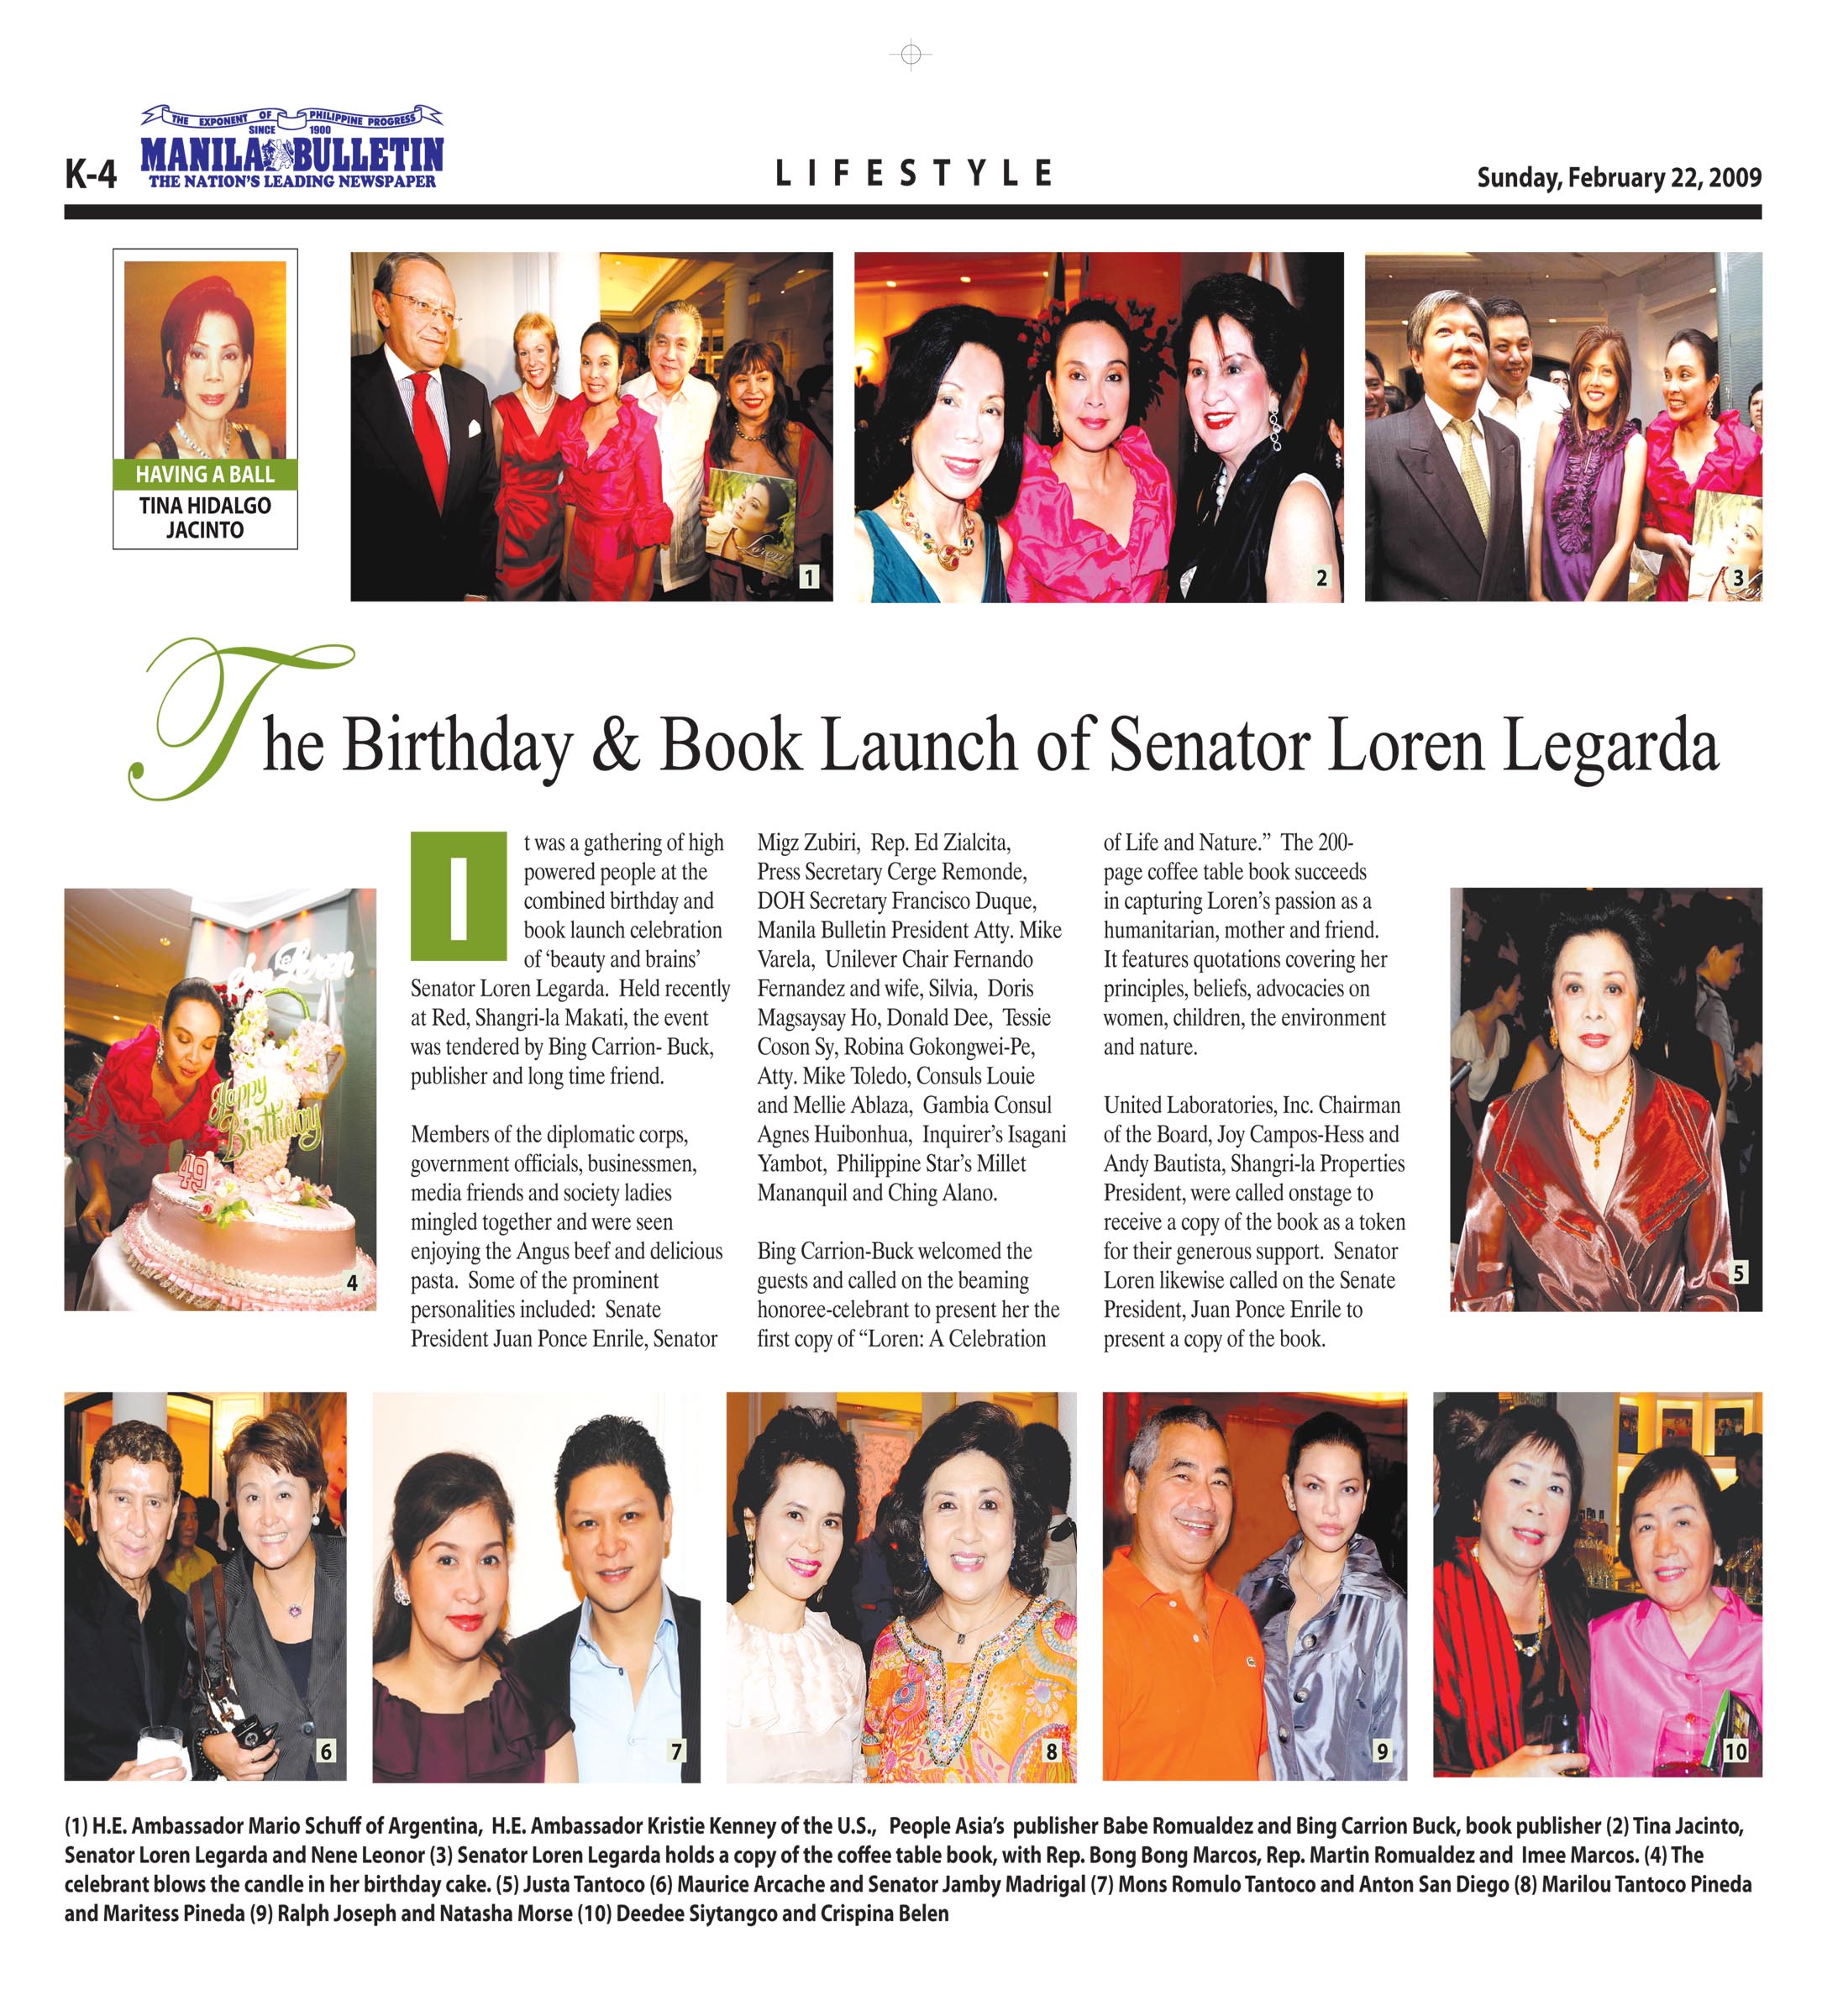 The Birthday & Book Launch of Senator Loren Legarda